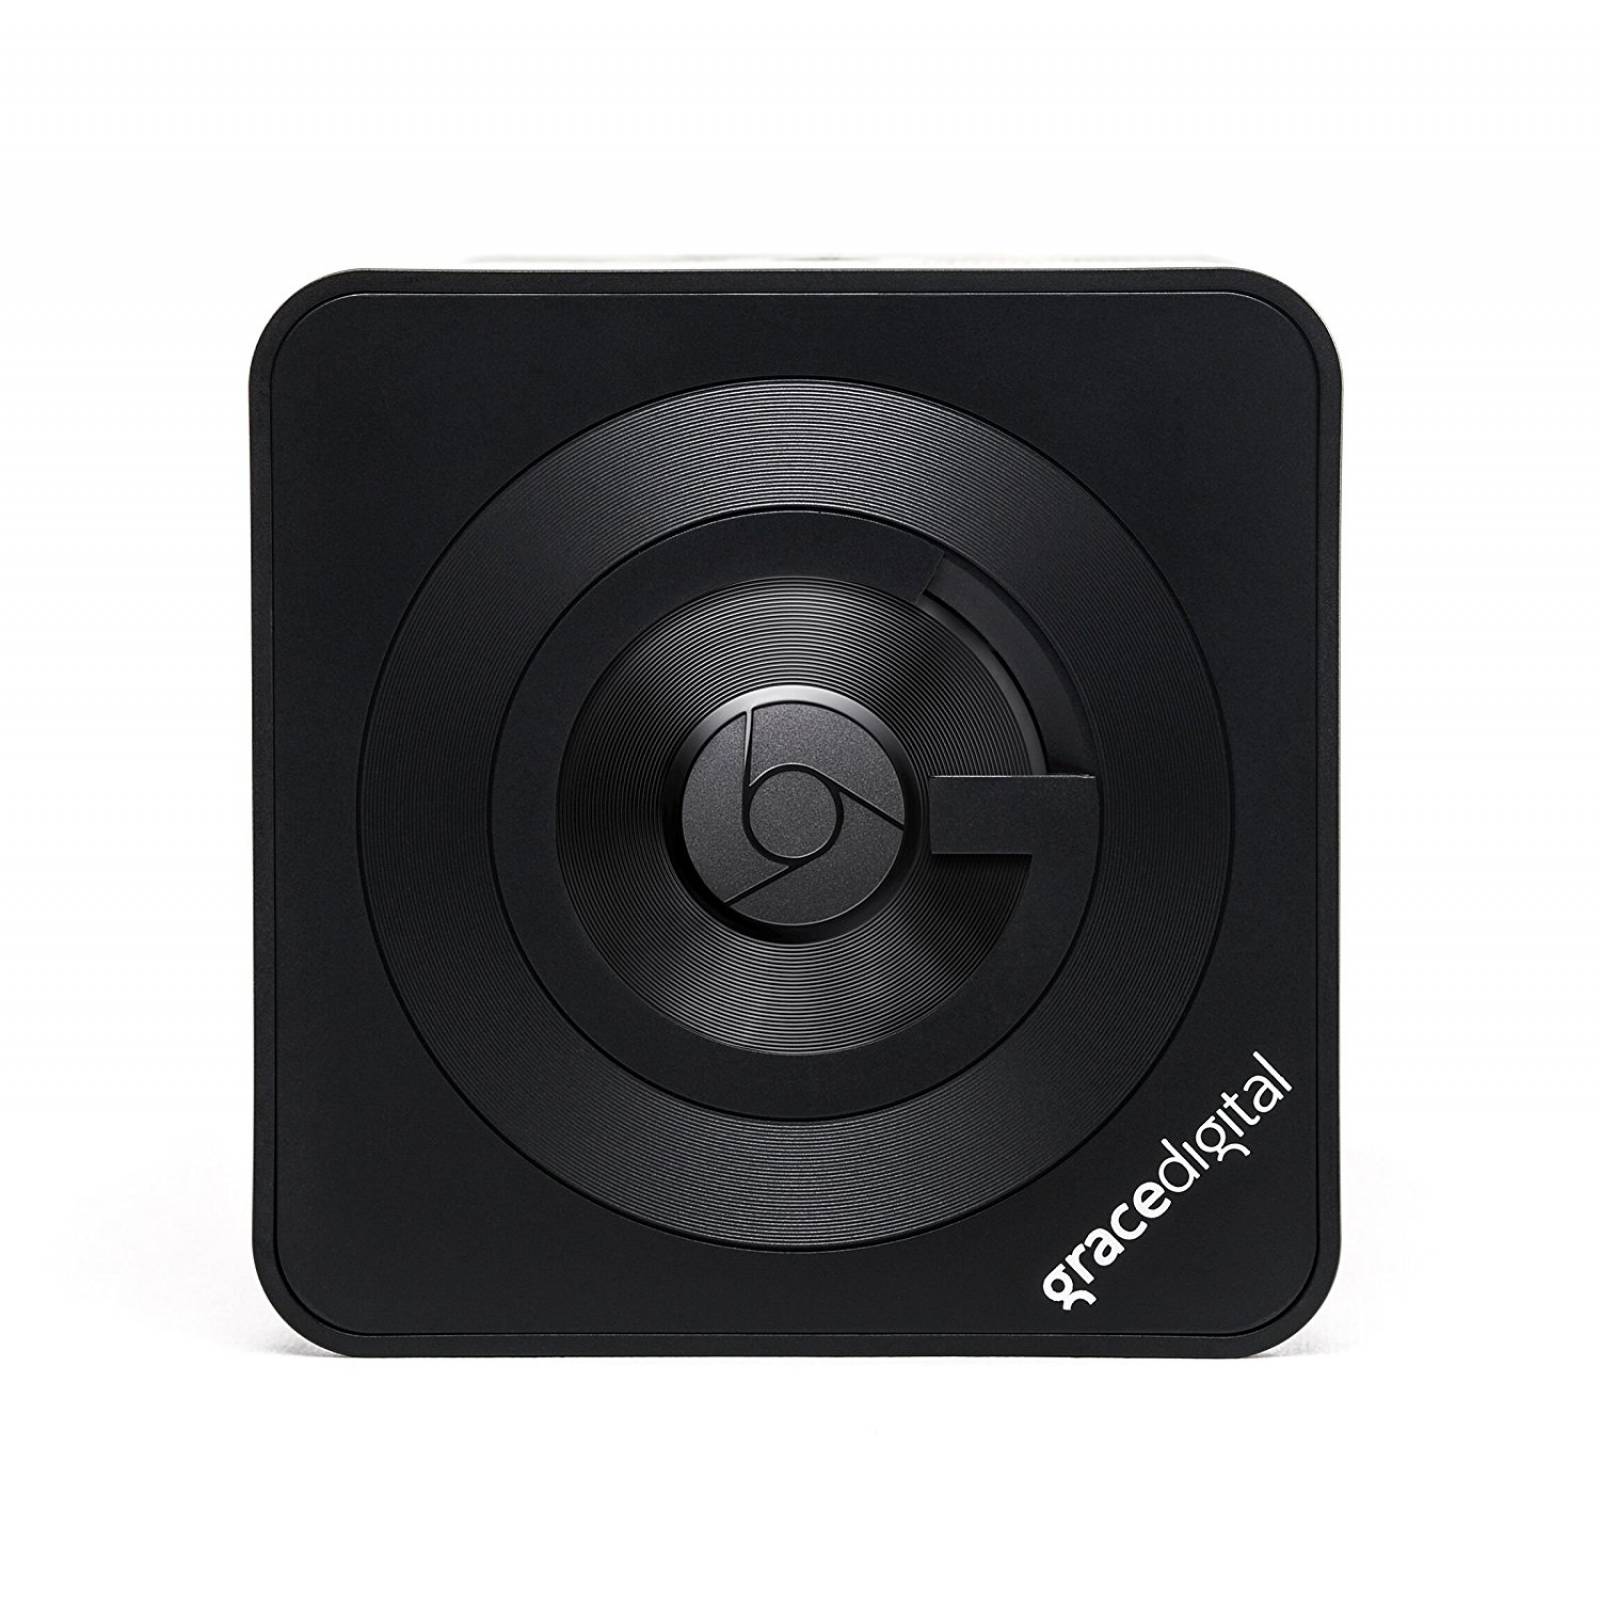 Grace Digital CastDockx2 - Chromecast Audio altavoz muelle